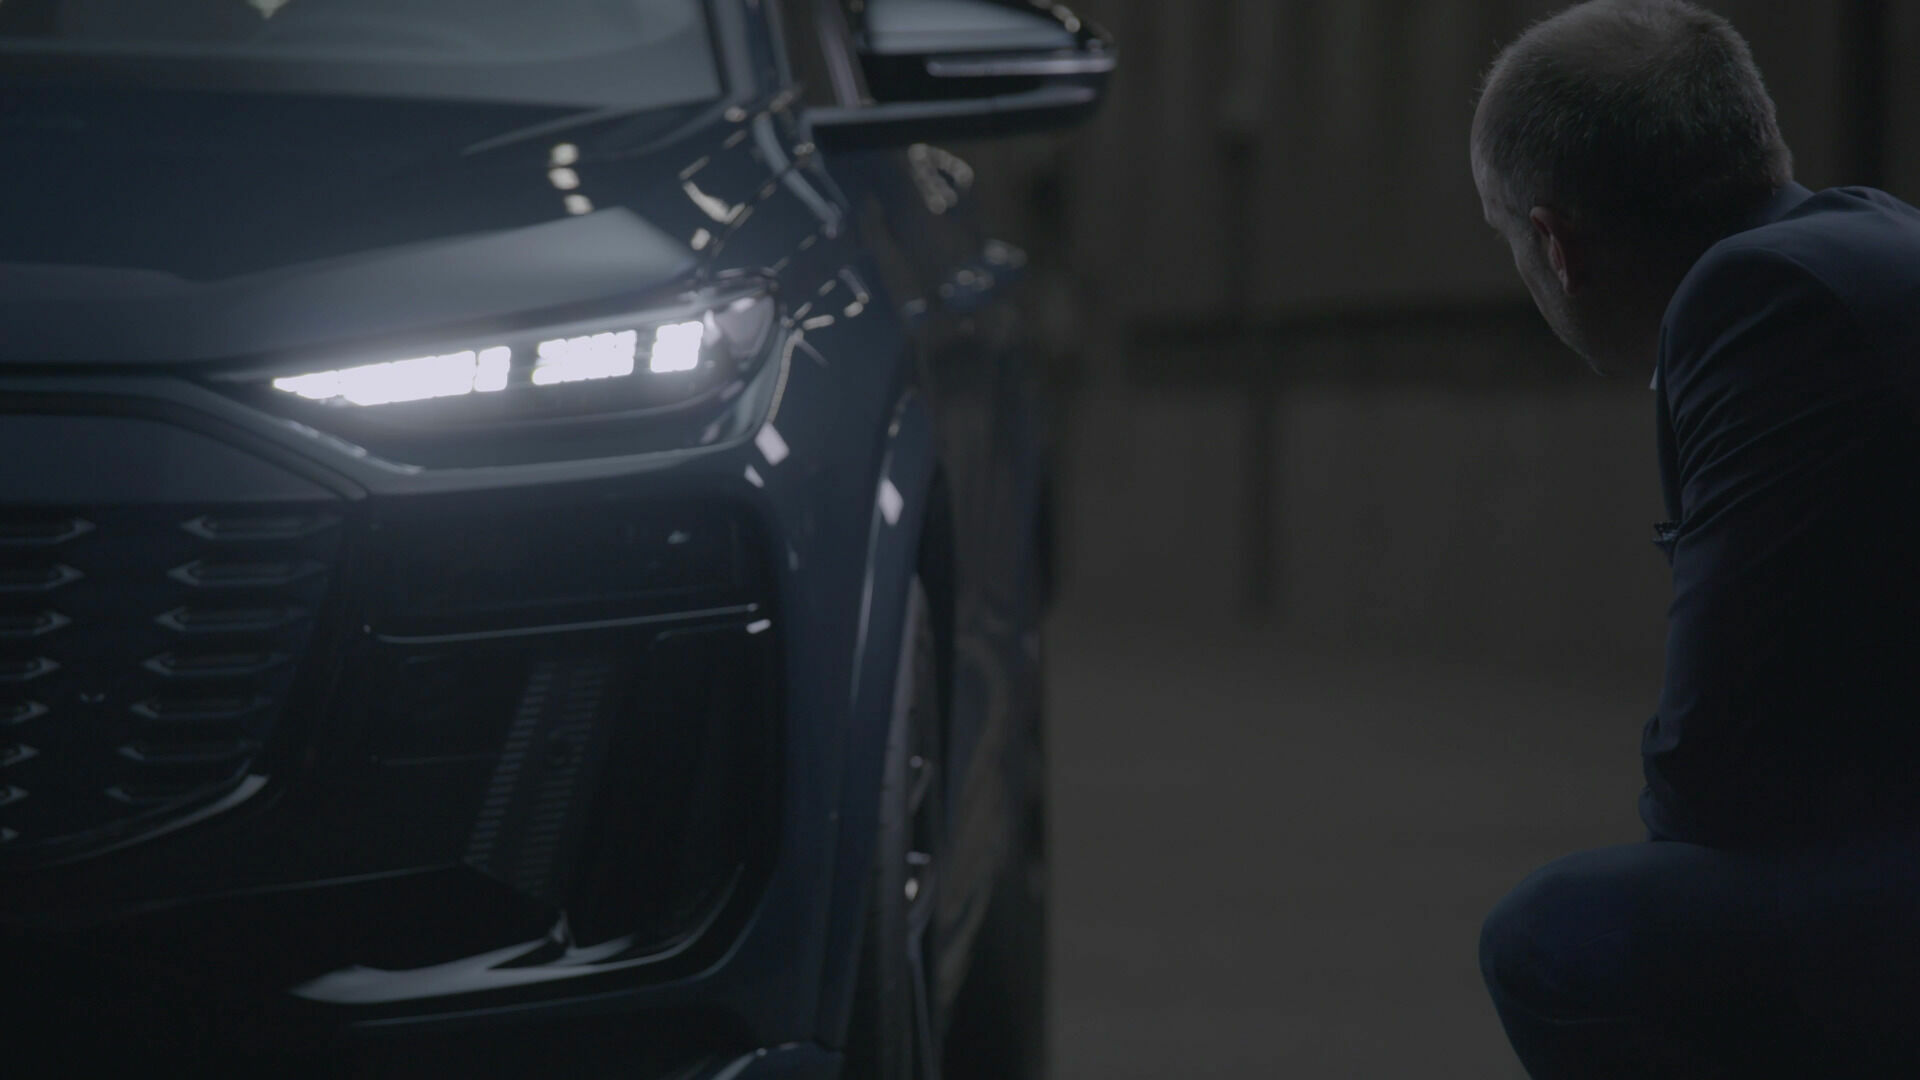 The light technology of the Audi Q6 e-tron